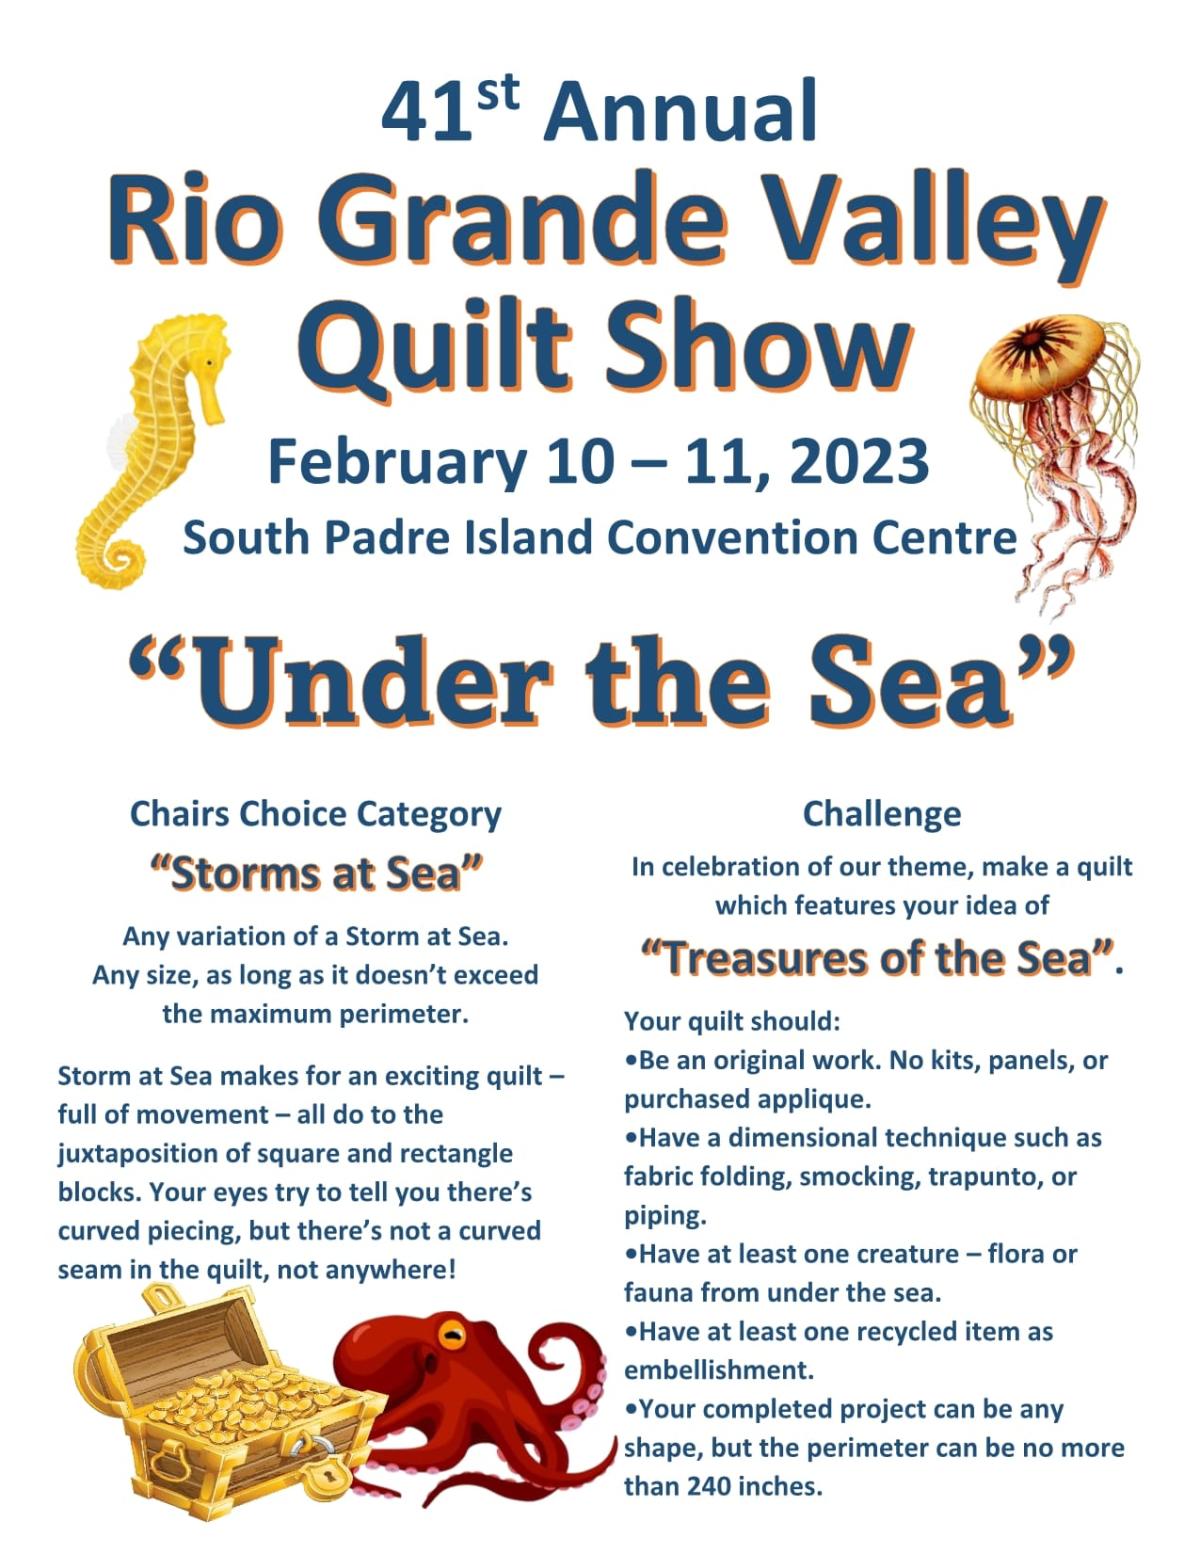 Rio Grande Valley Quilt Show "Under the Sea"